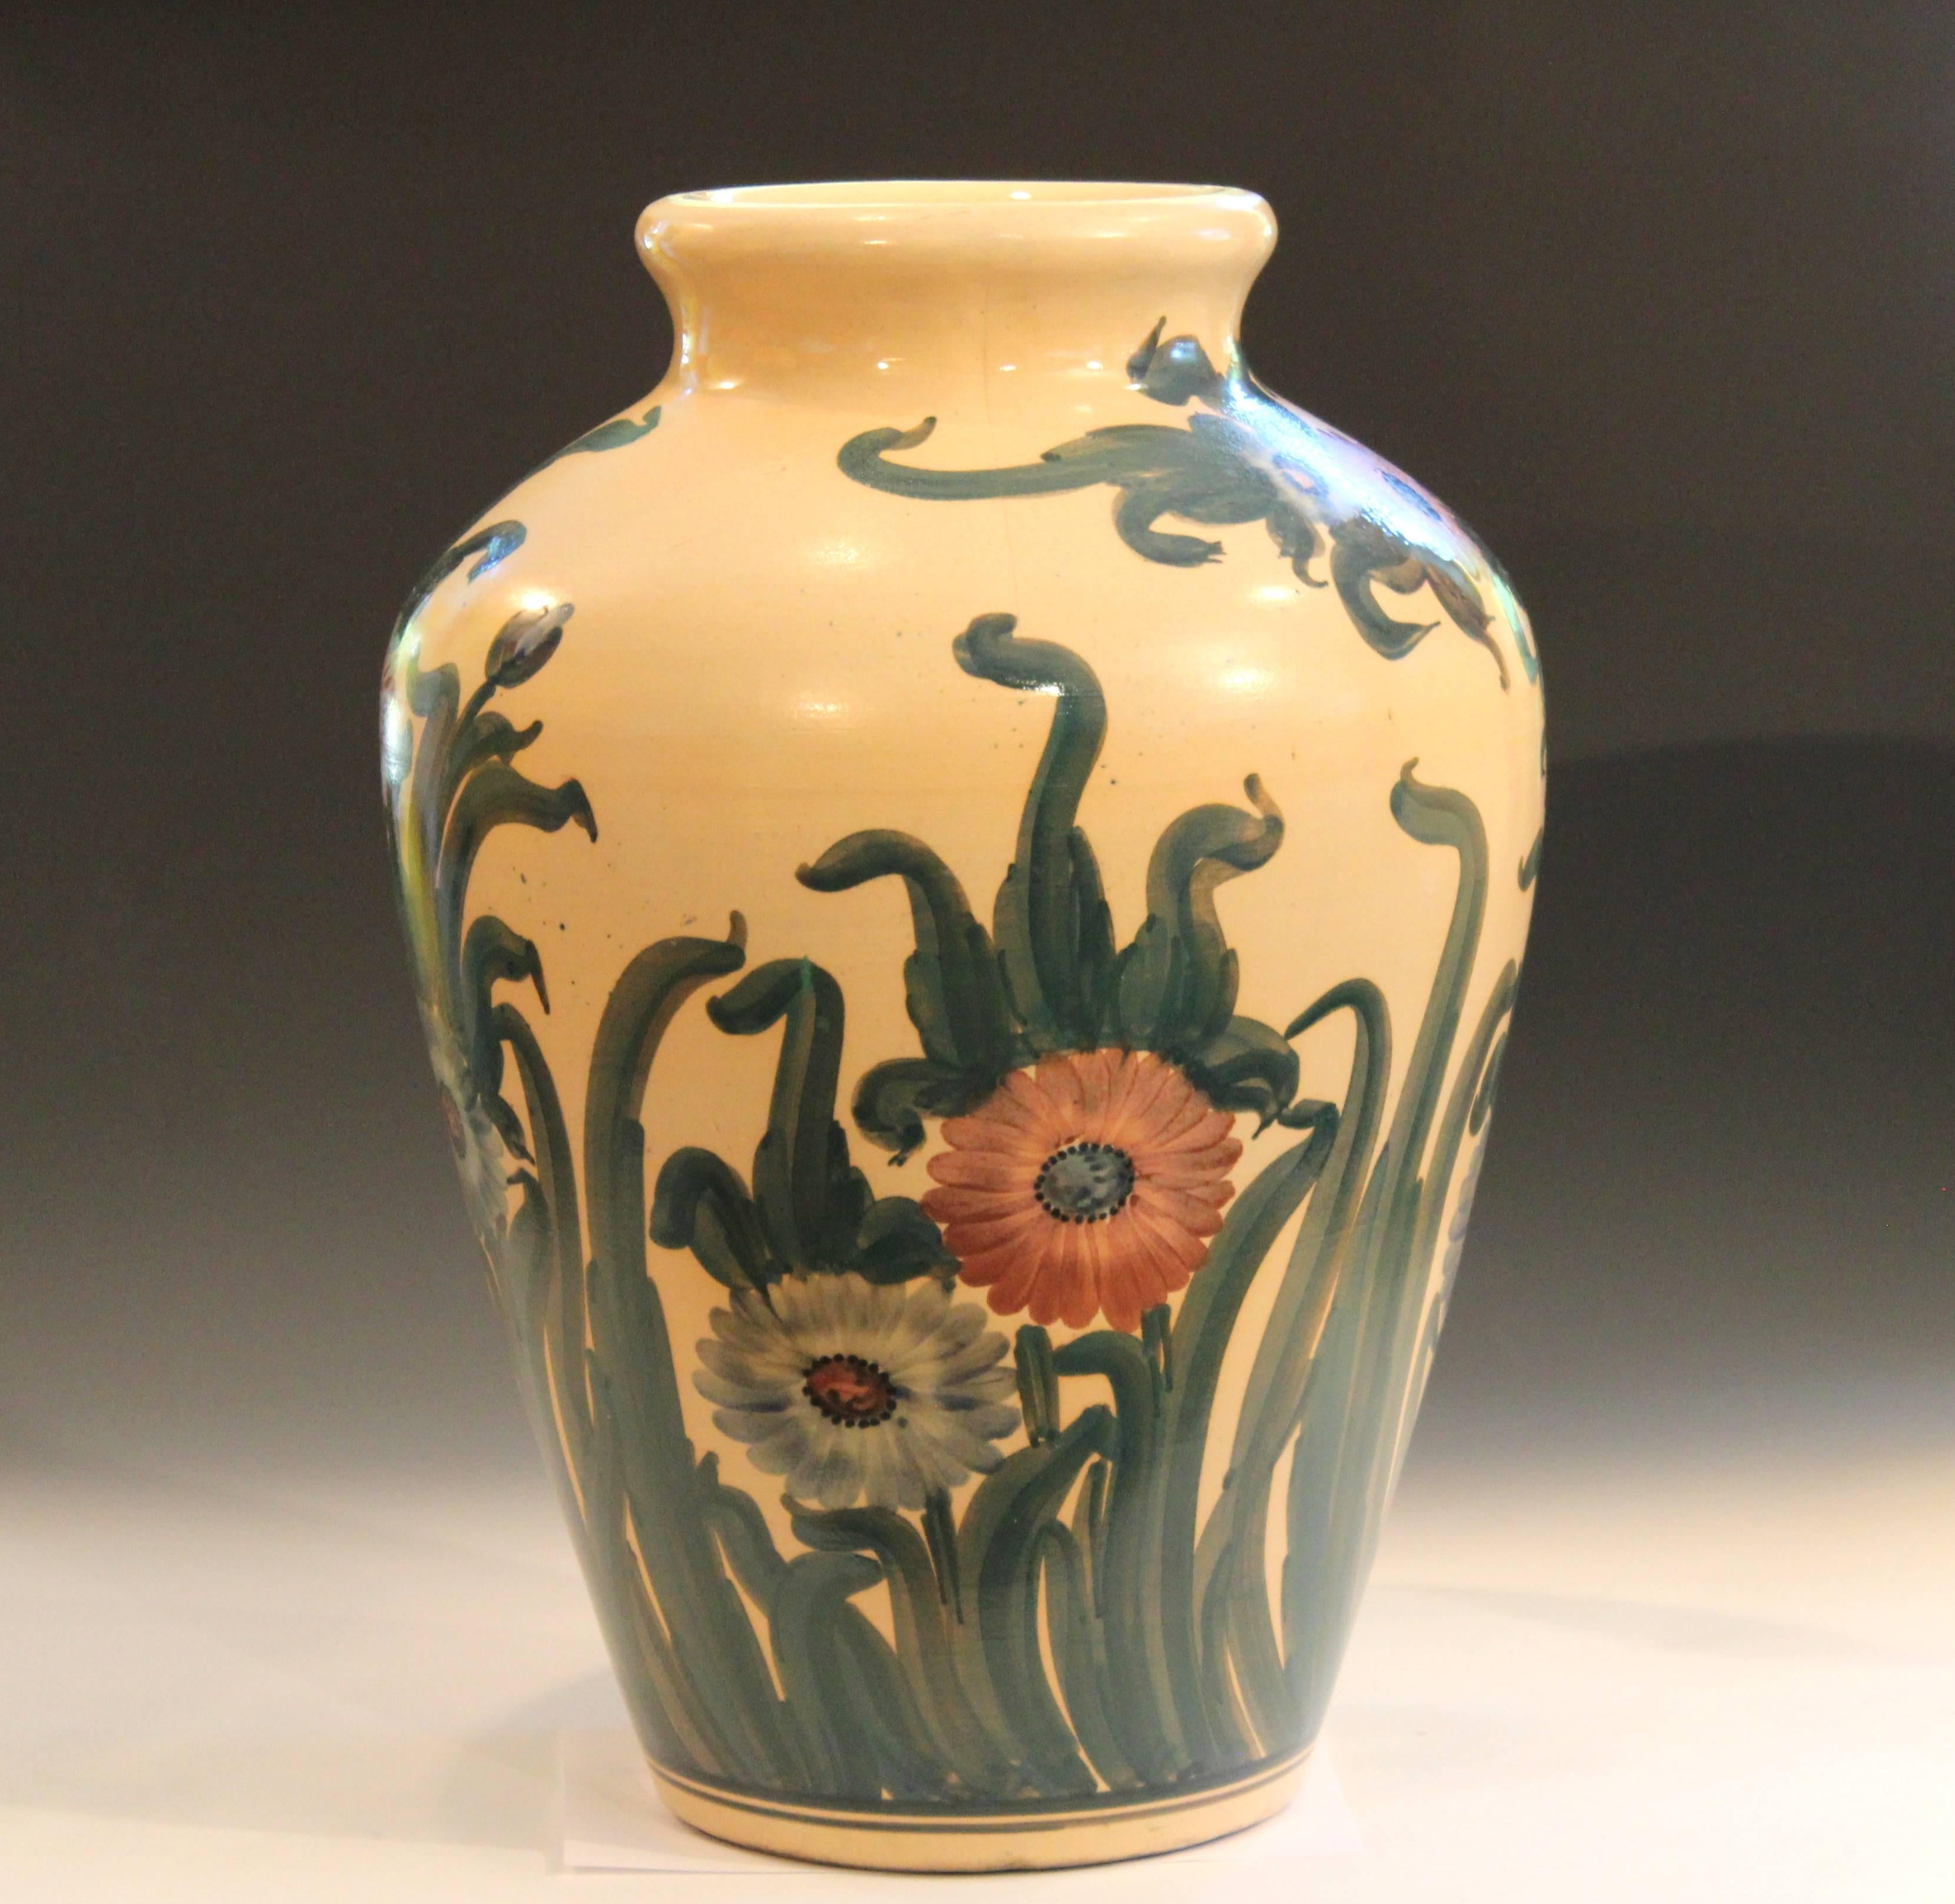 Huge and rare RRPCO Dedonatis vase, circa early 20th century. Measures: 23